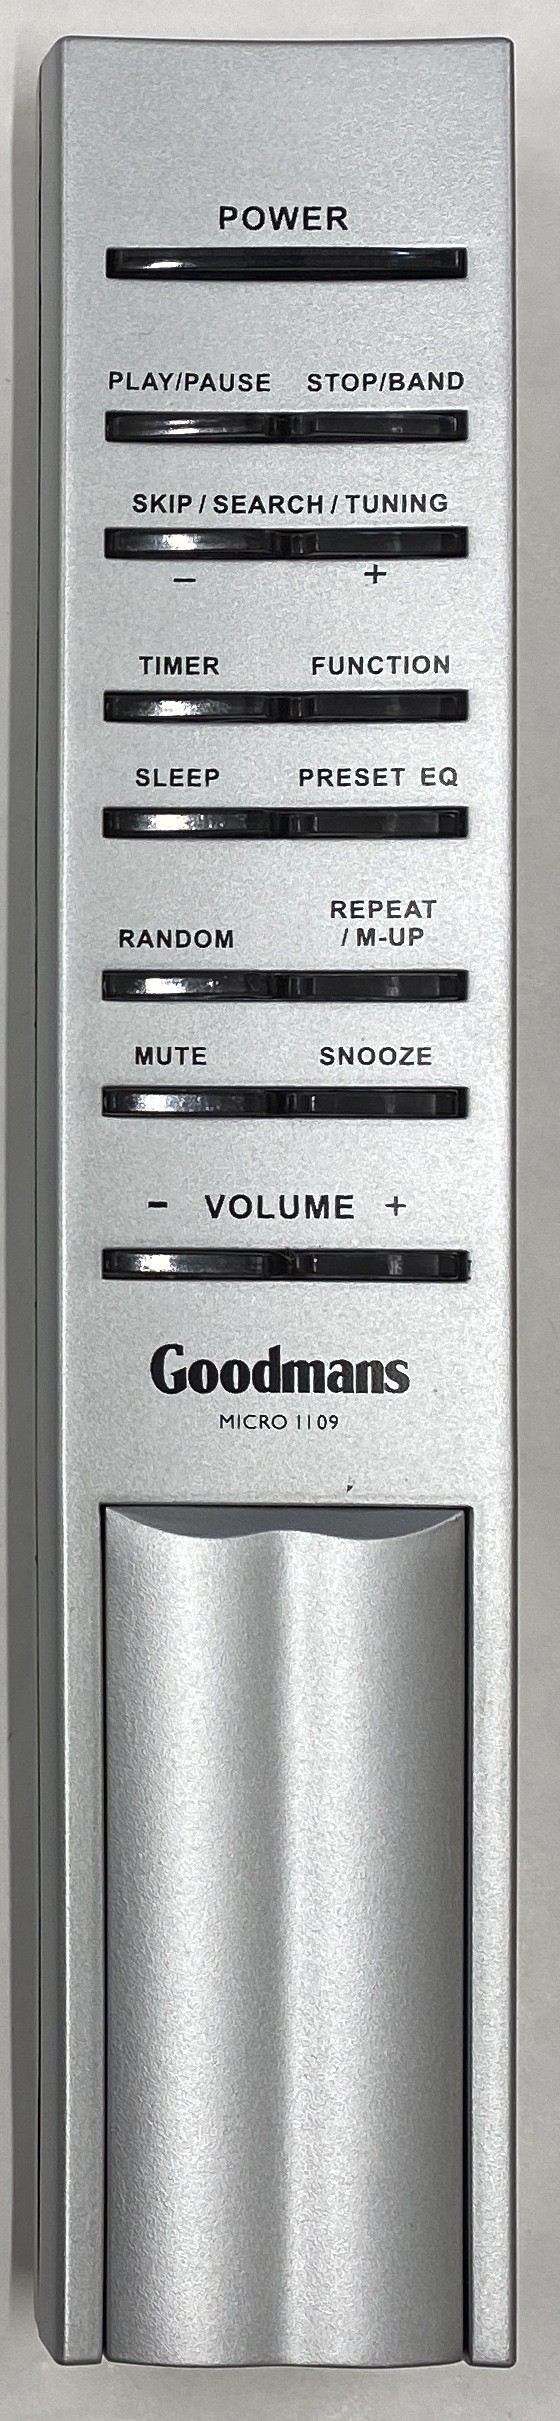 GOODMANS MICRO1109 Remote Control Original